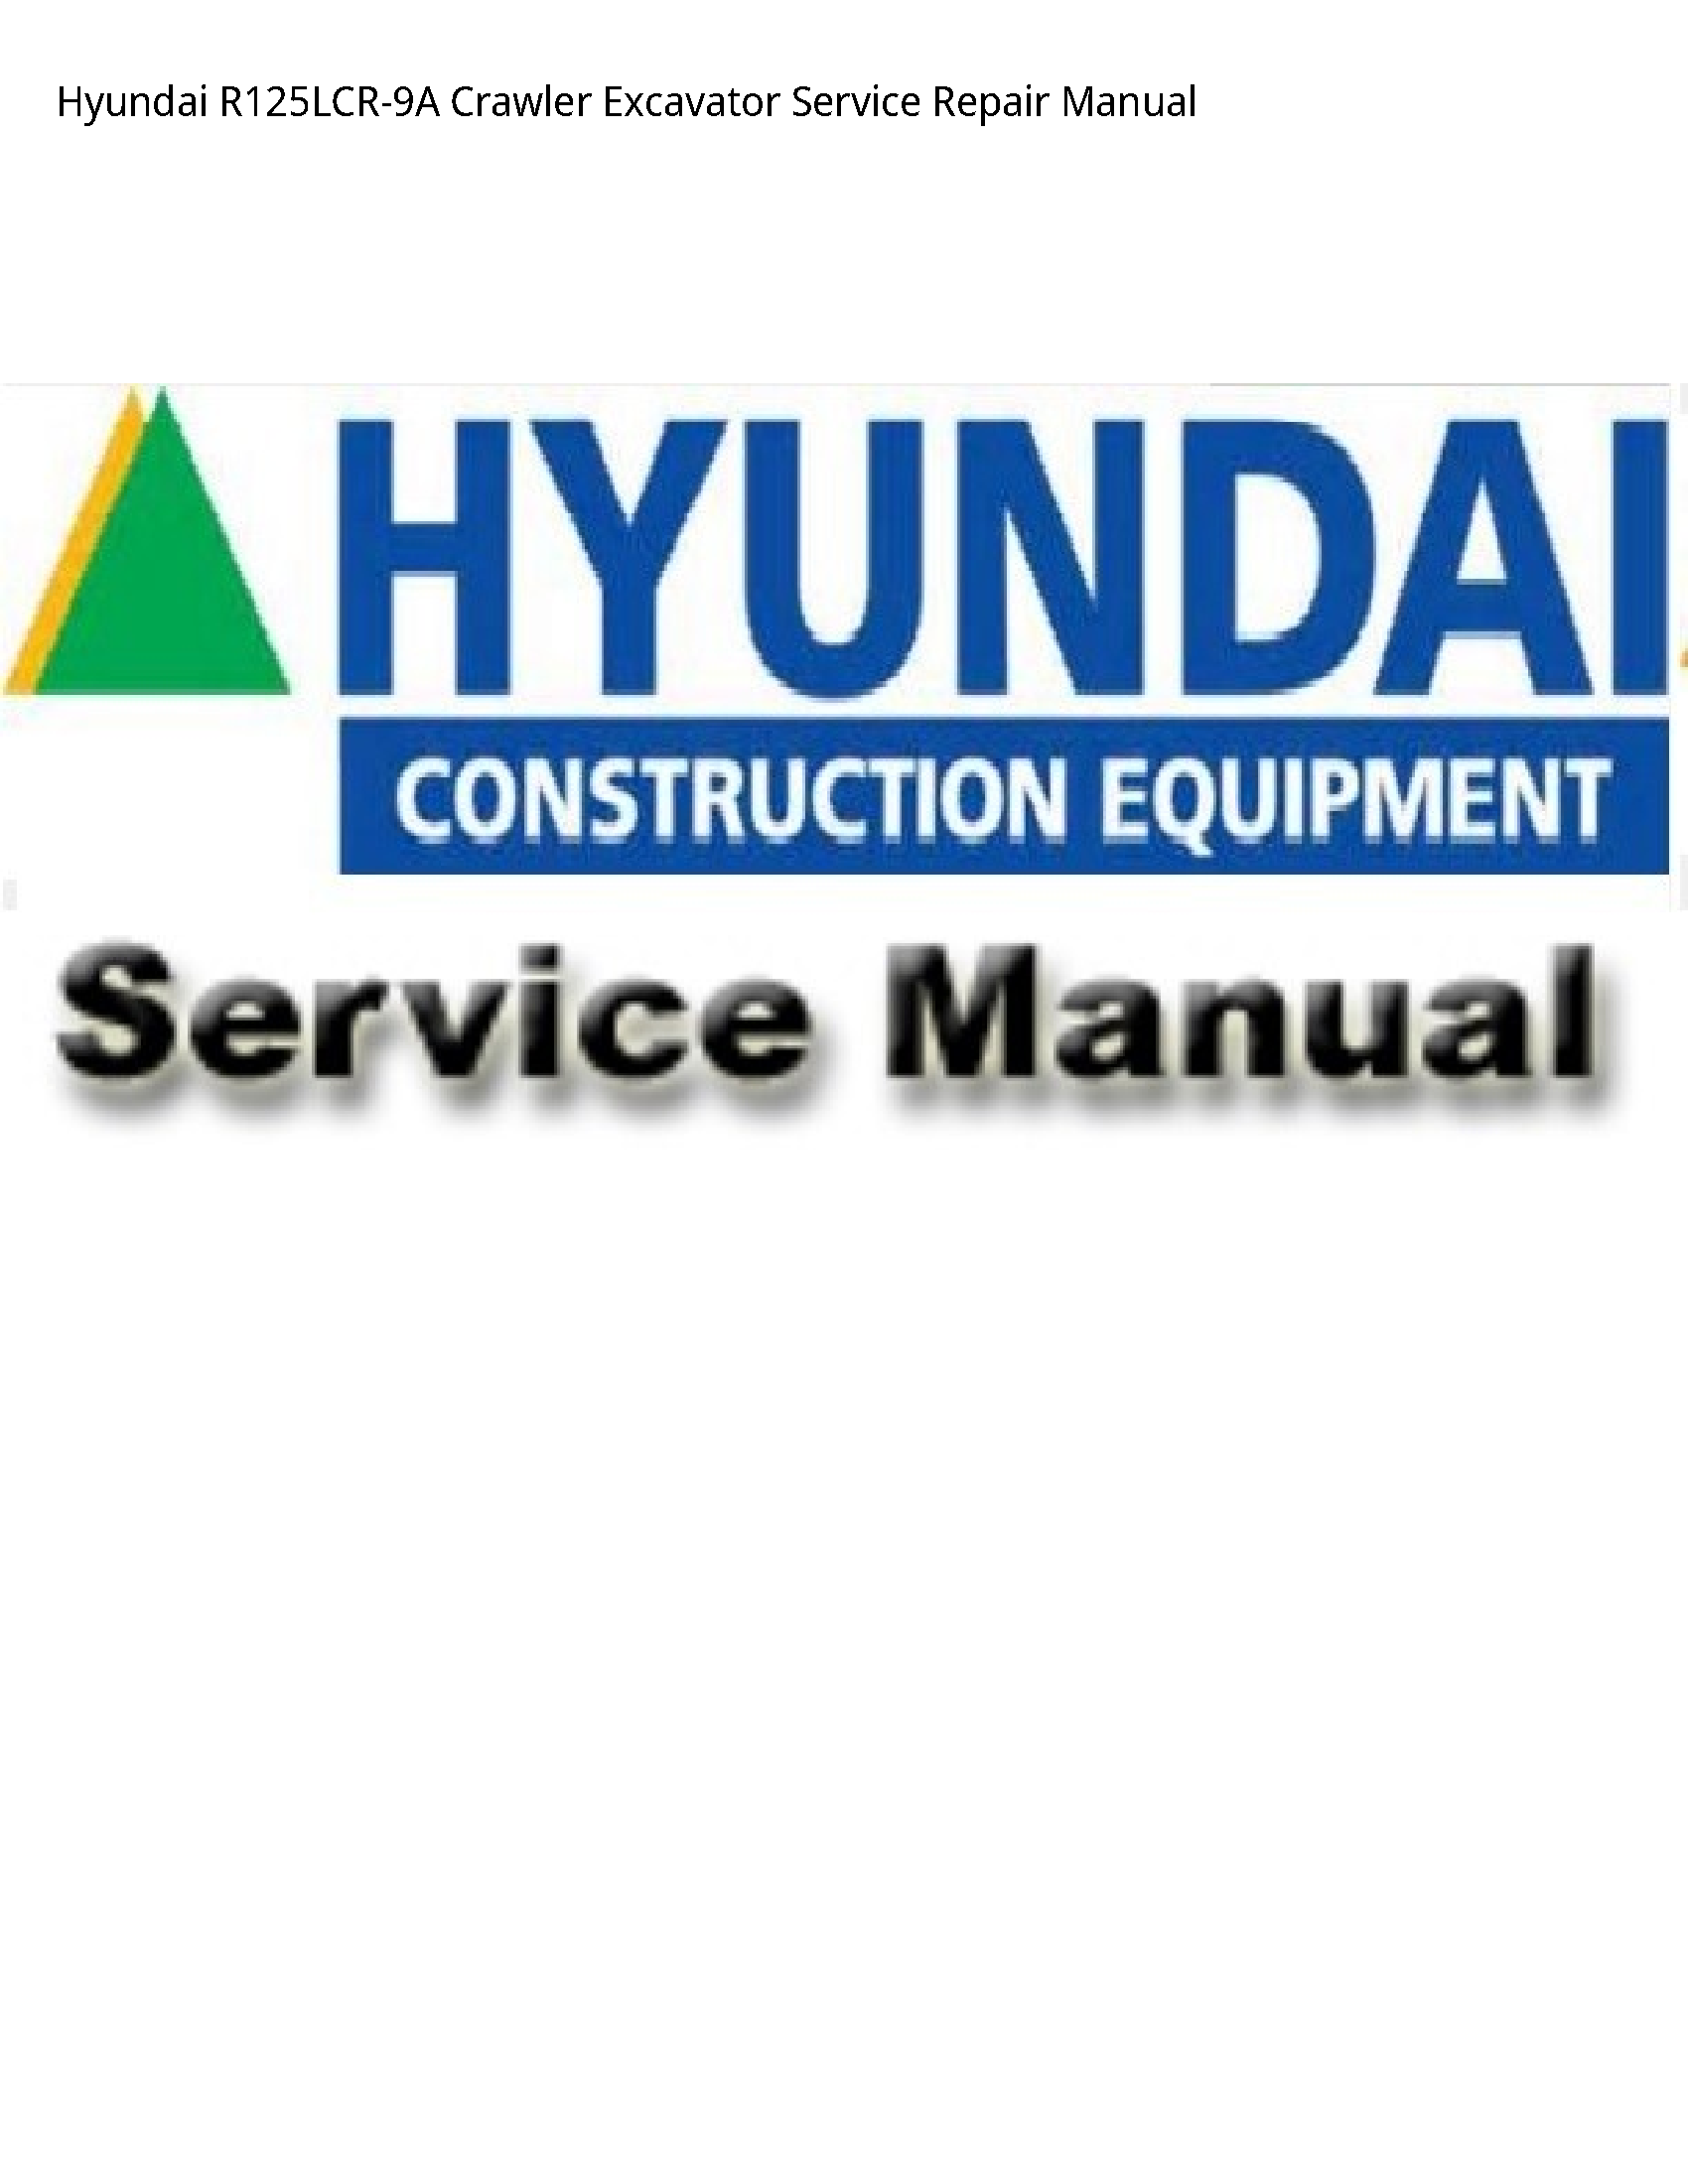 Hyundai R125LCR-9A Crawler Excavator manual